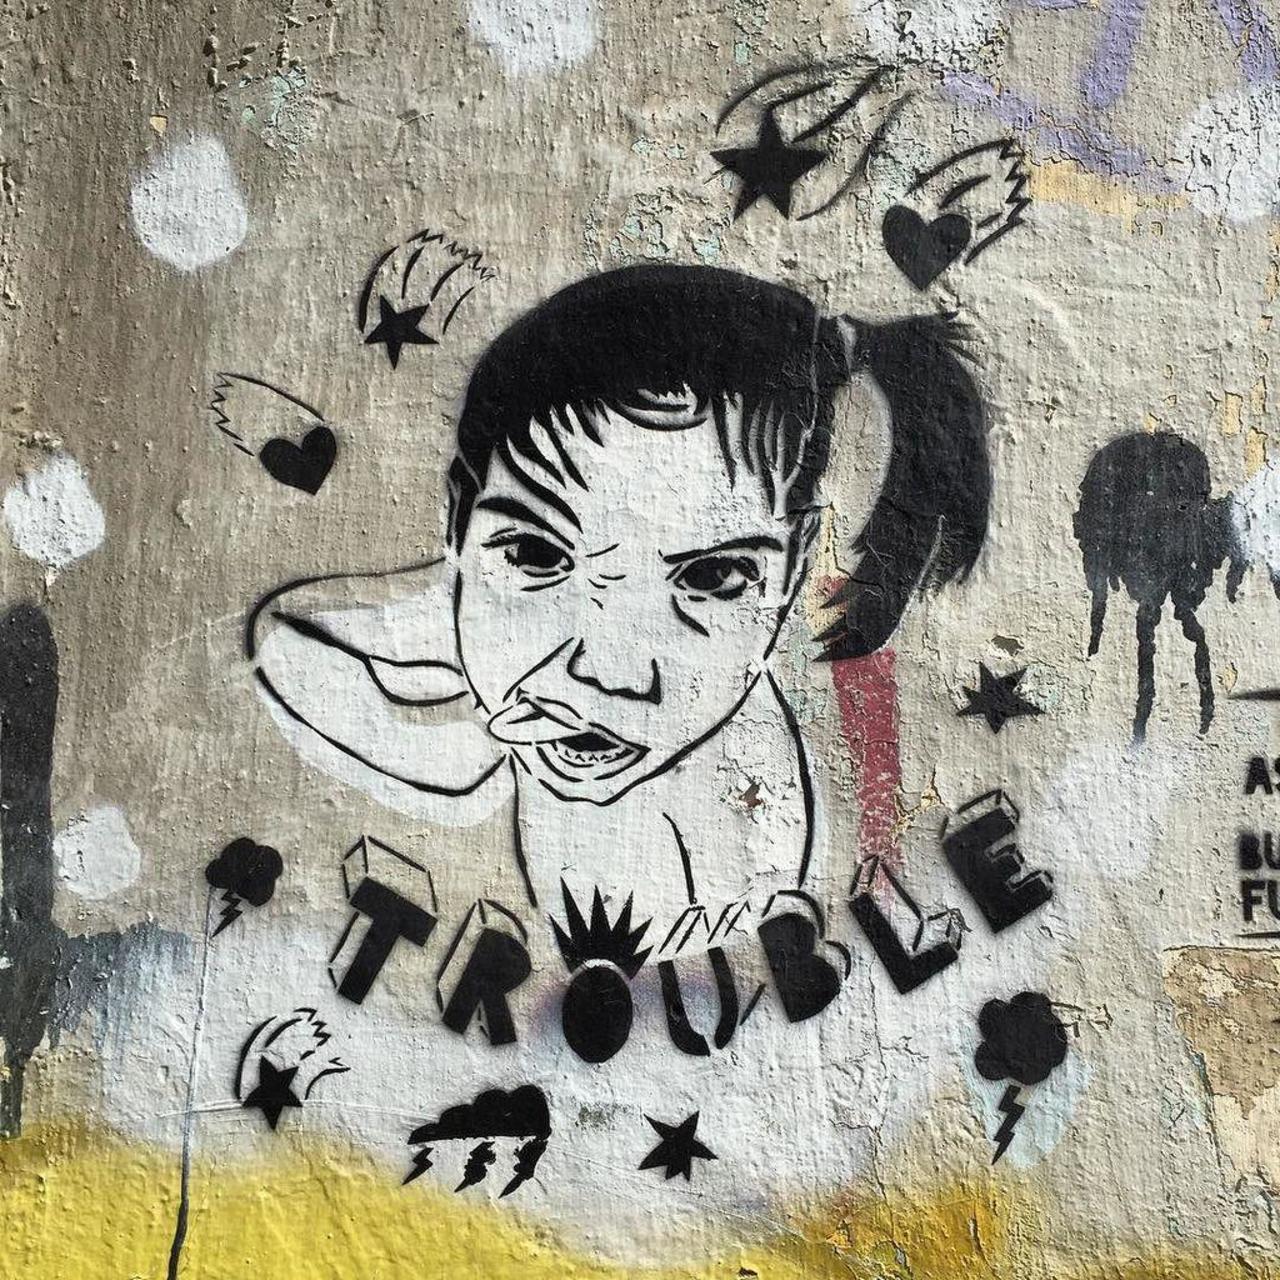 Graffiti Art
Central Athens, Greece
#graff #graffiti #graffitiathens #outsider #outsiderart #street #streetart #str… http://t.co/NPyPQXZQD5